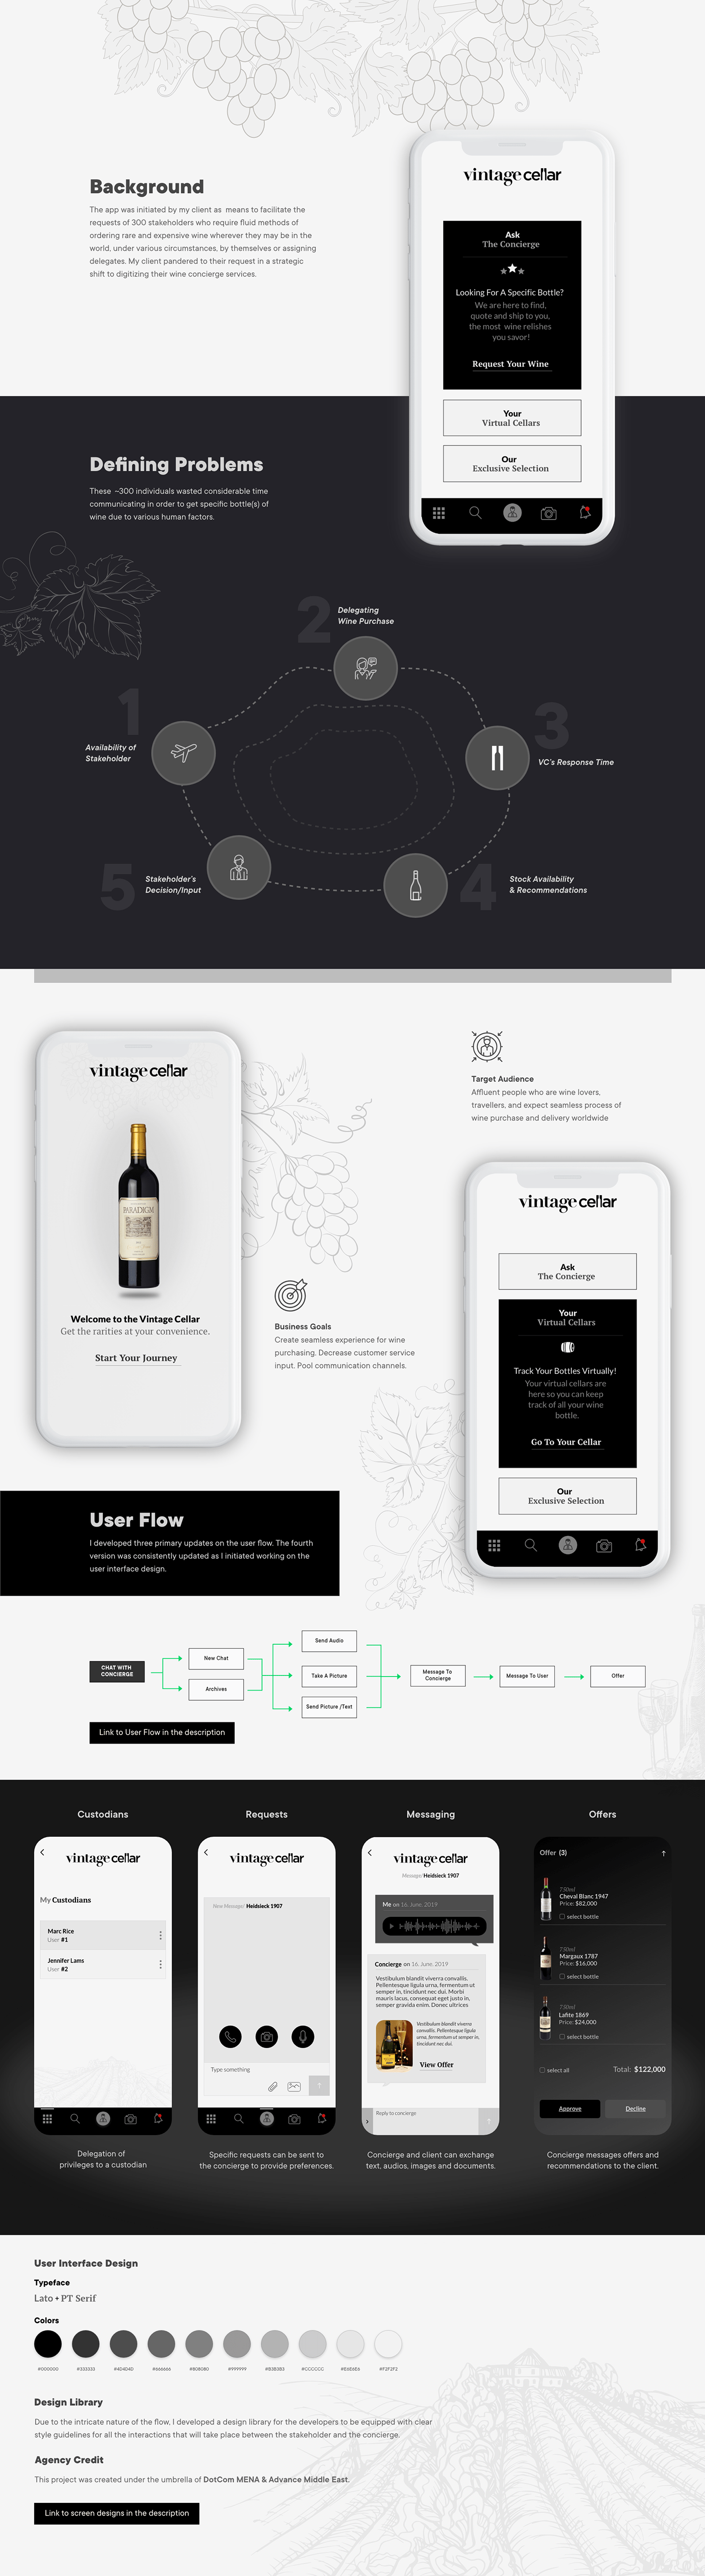 wine shop Interaction design  user experience User Experience Design User Experience Research user interface design art direction  design system Mobile app